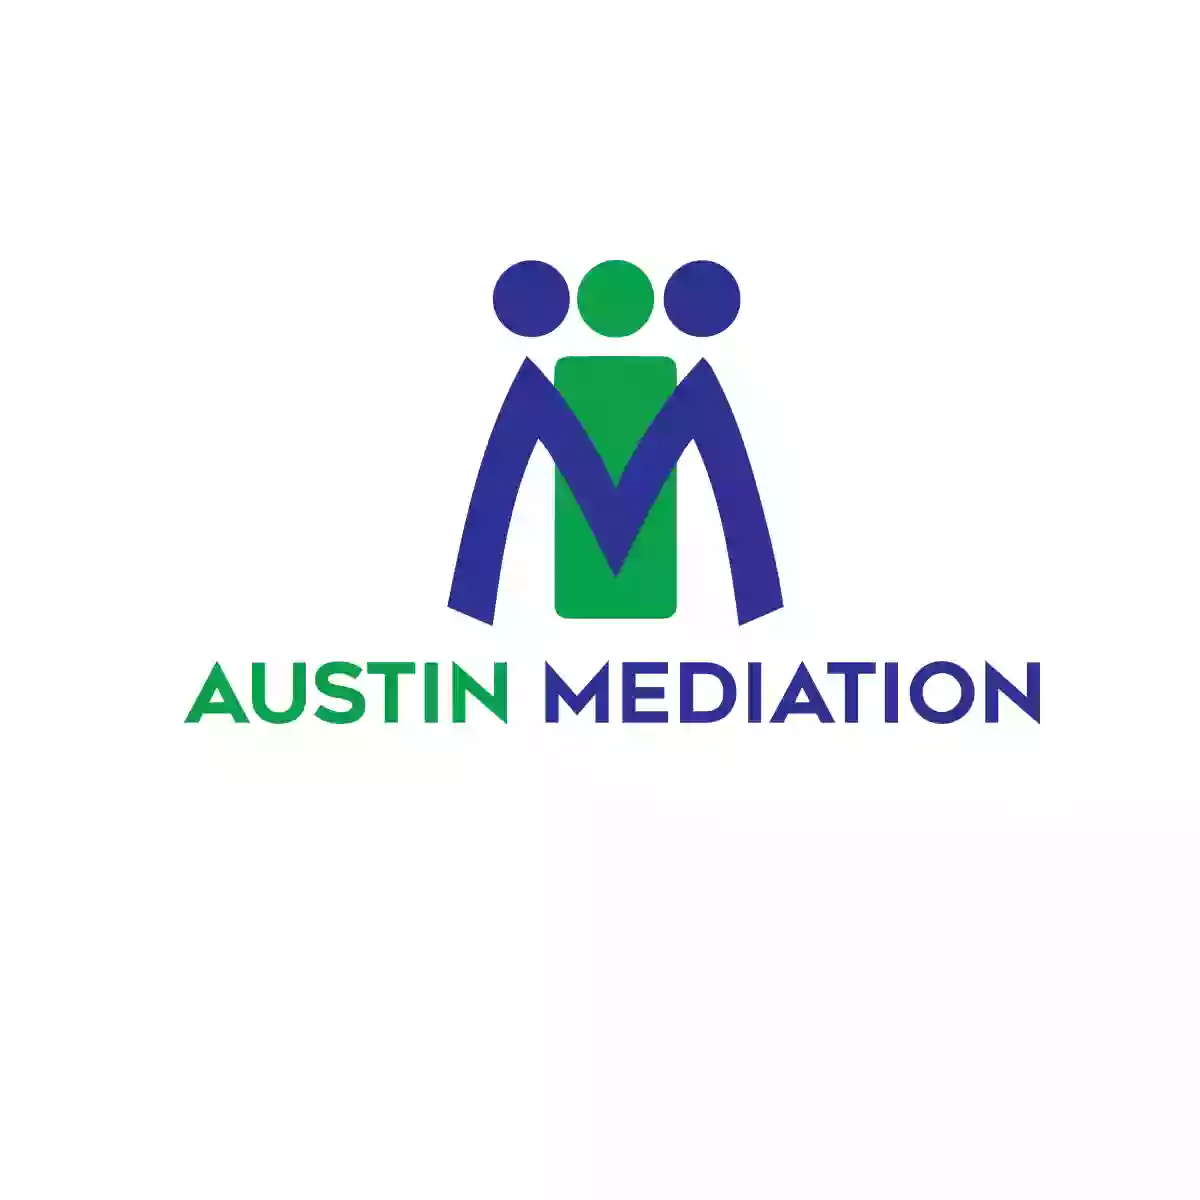 Austin Mediation